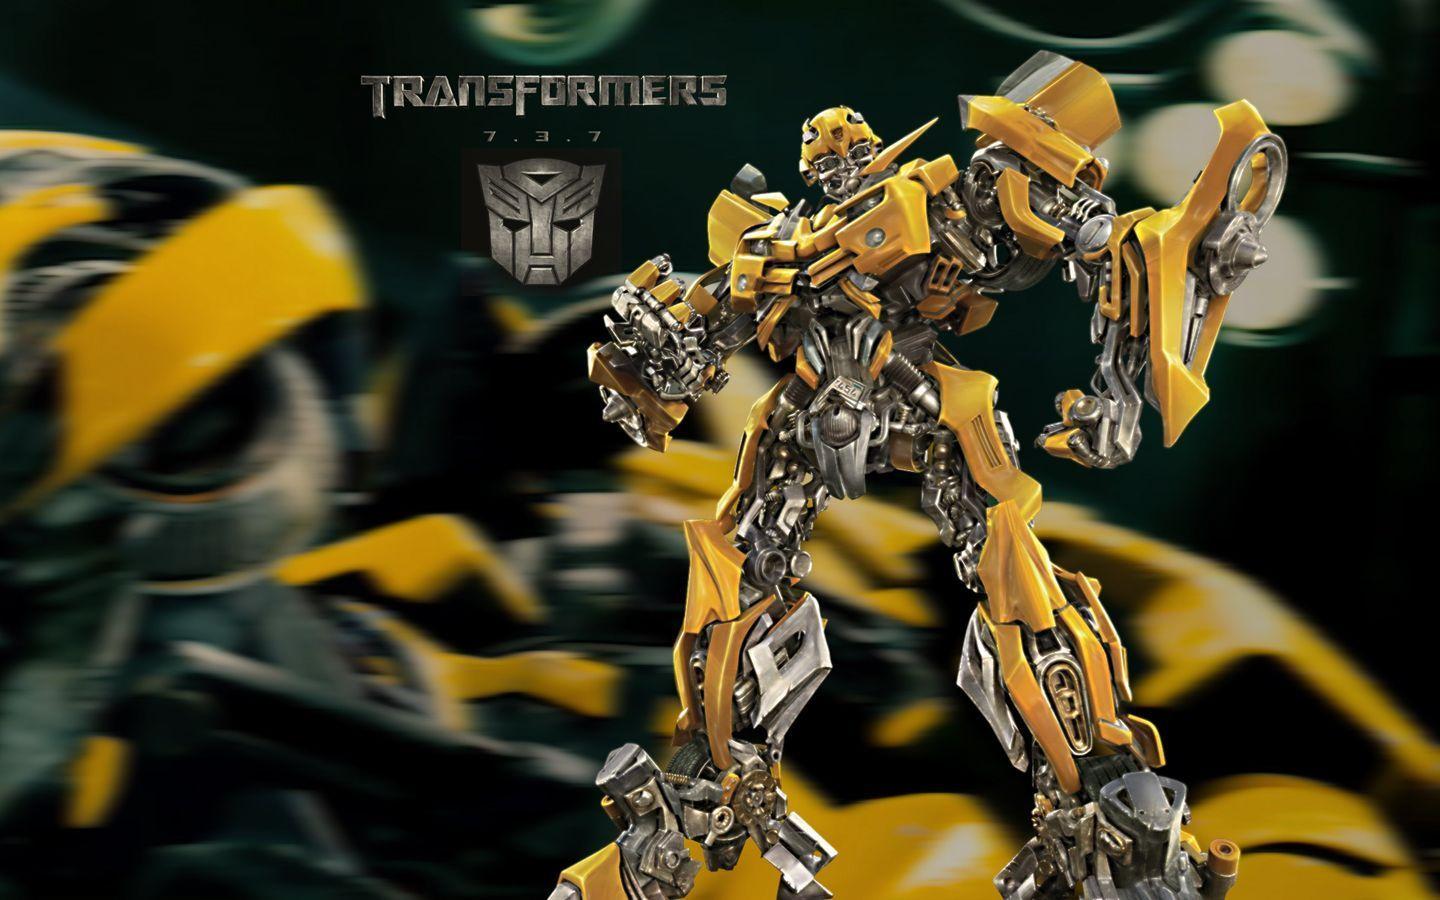 Transformers 2 Bumblebee Camaro Wallpapers